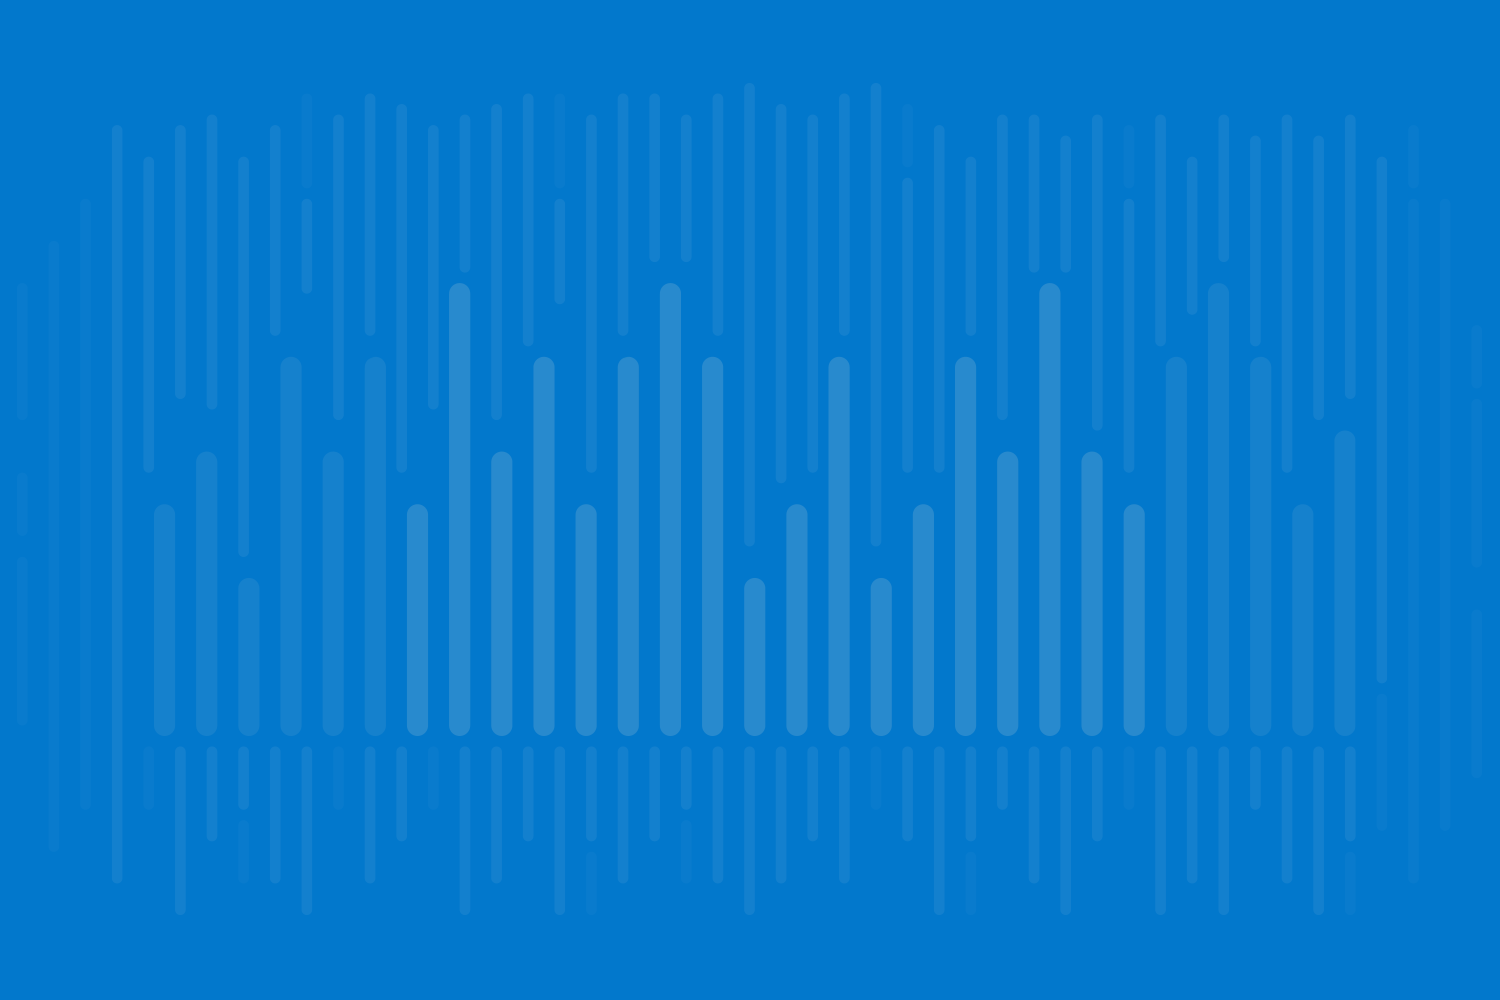 Abstract data visualization art variation on cobalt blue